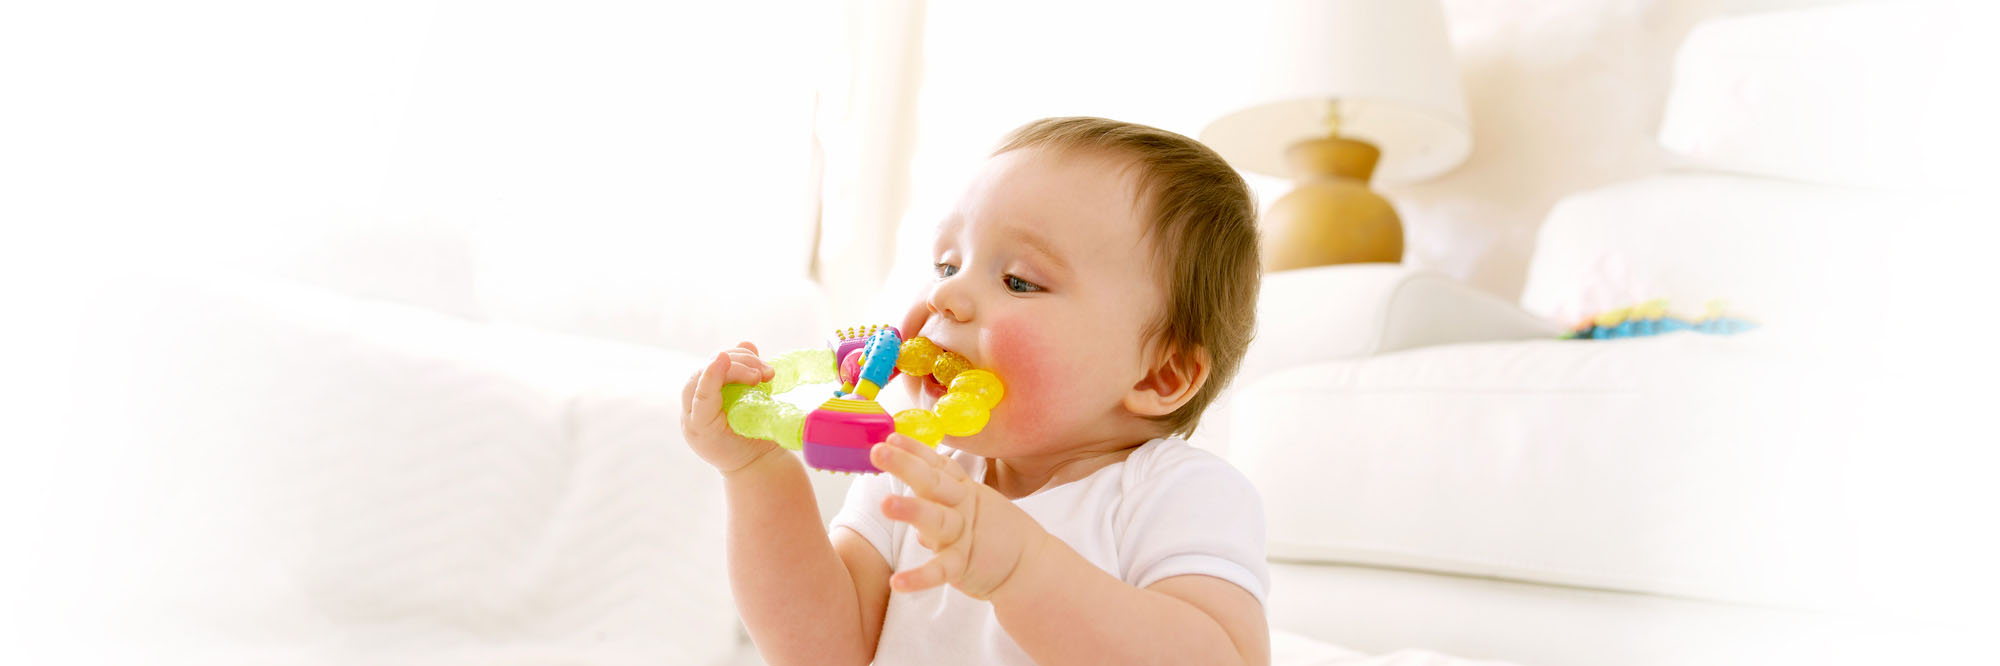 At what age do babies start teething?